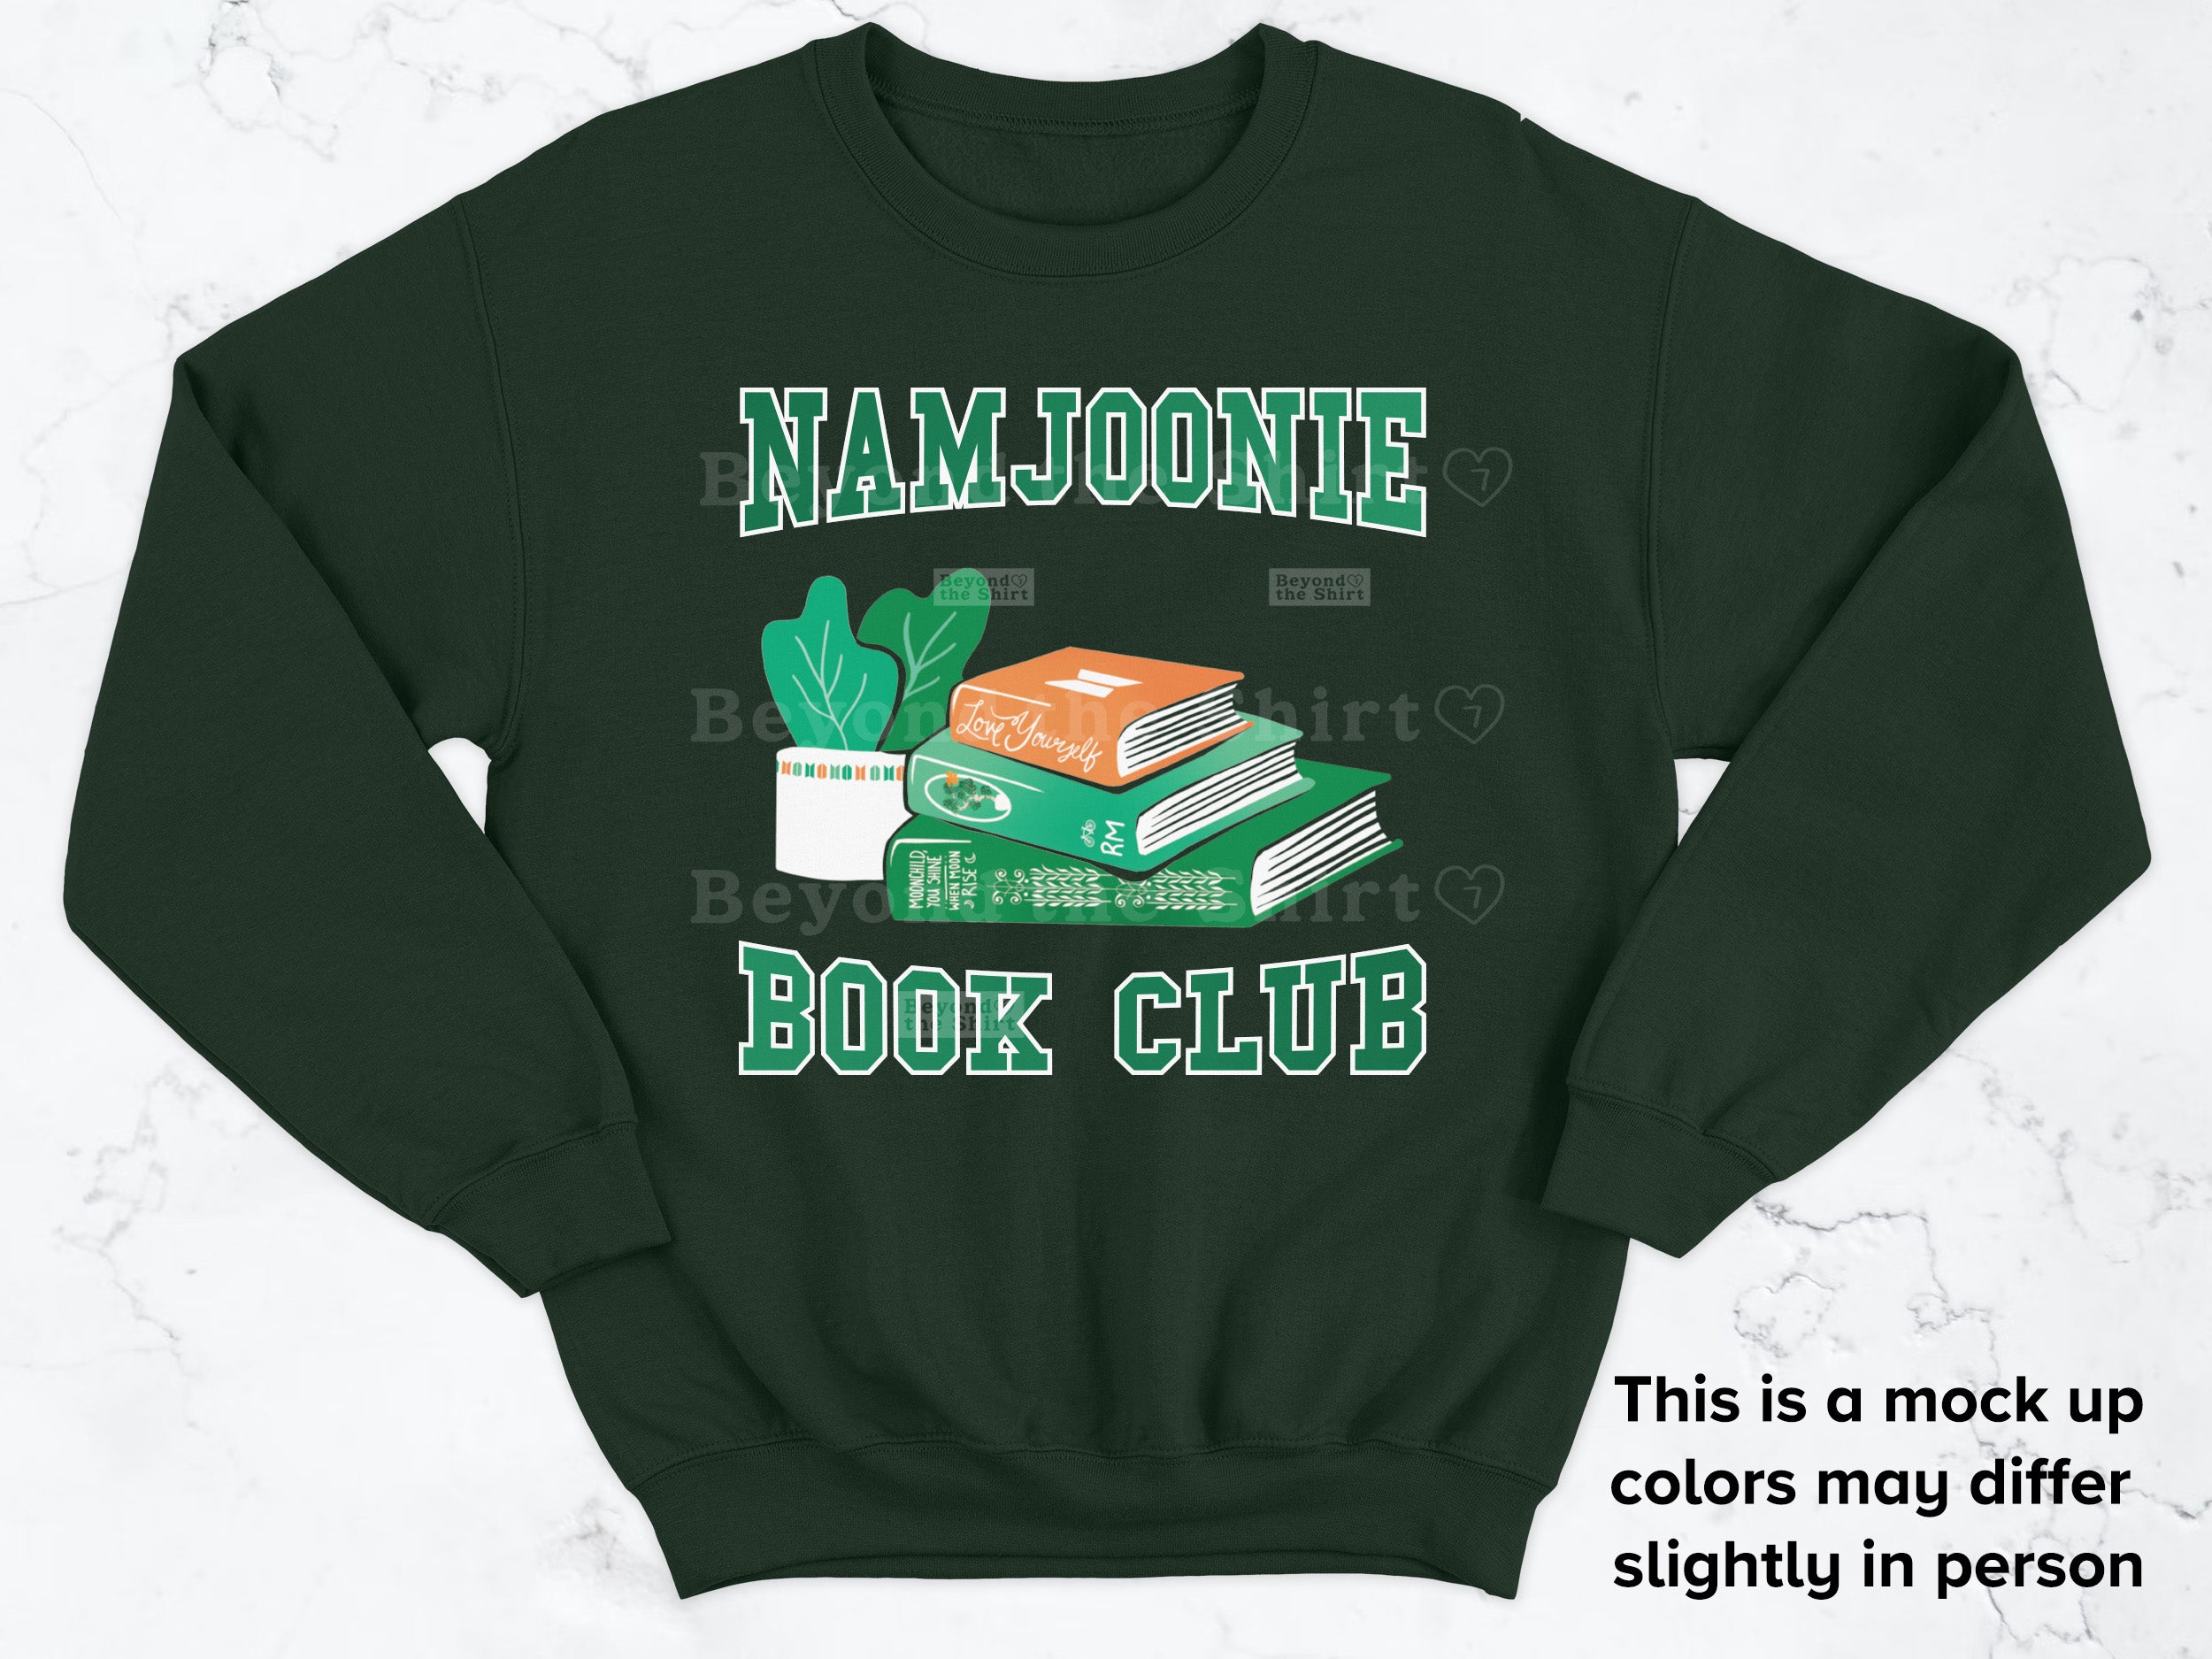 Namjoonie Book Club Shirts and Hoodies 2.0